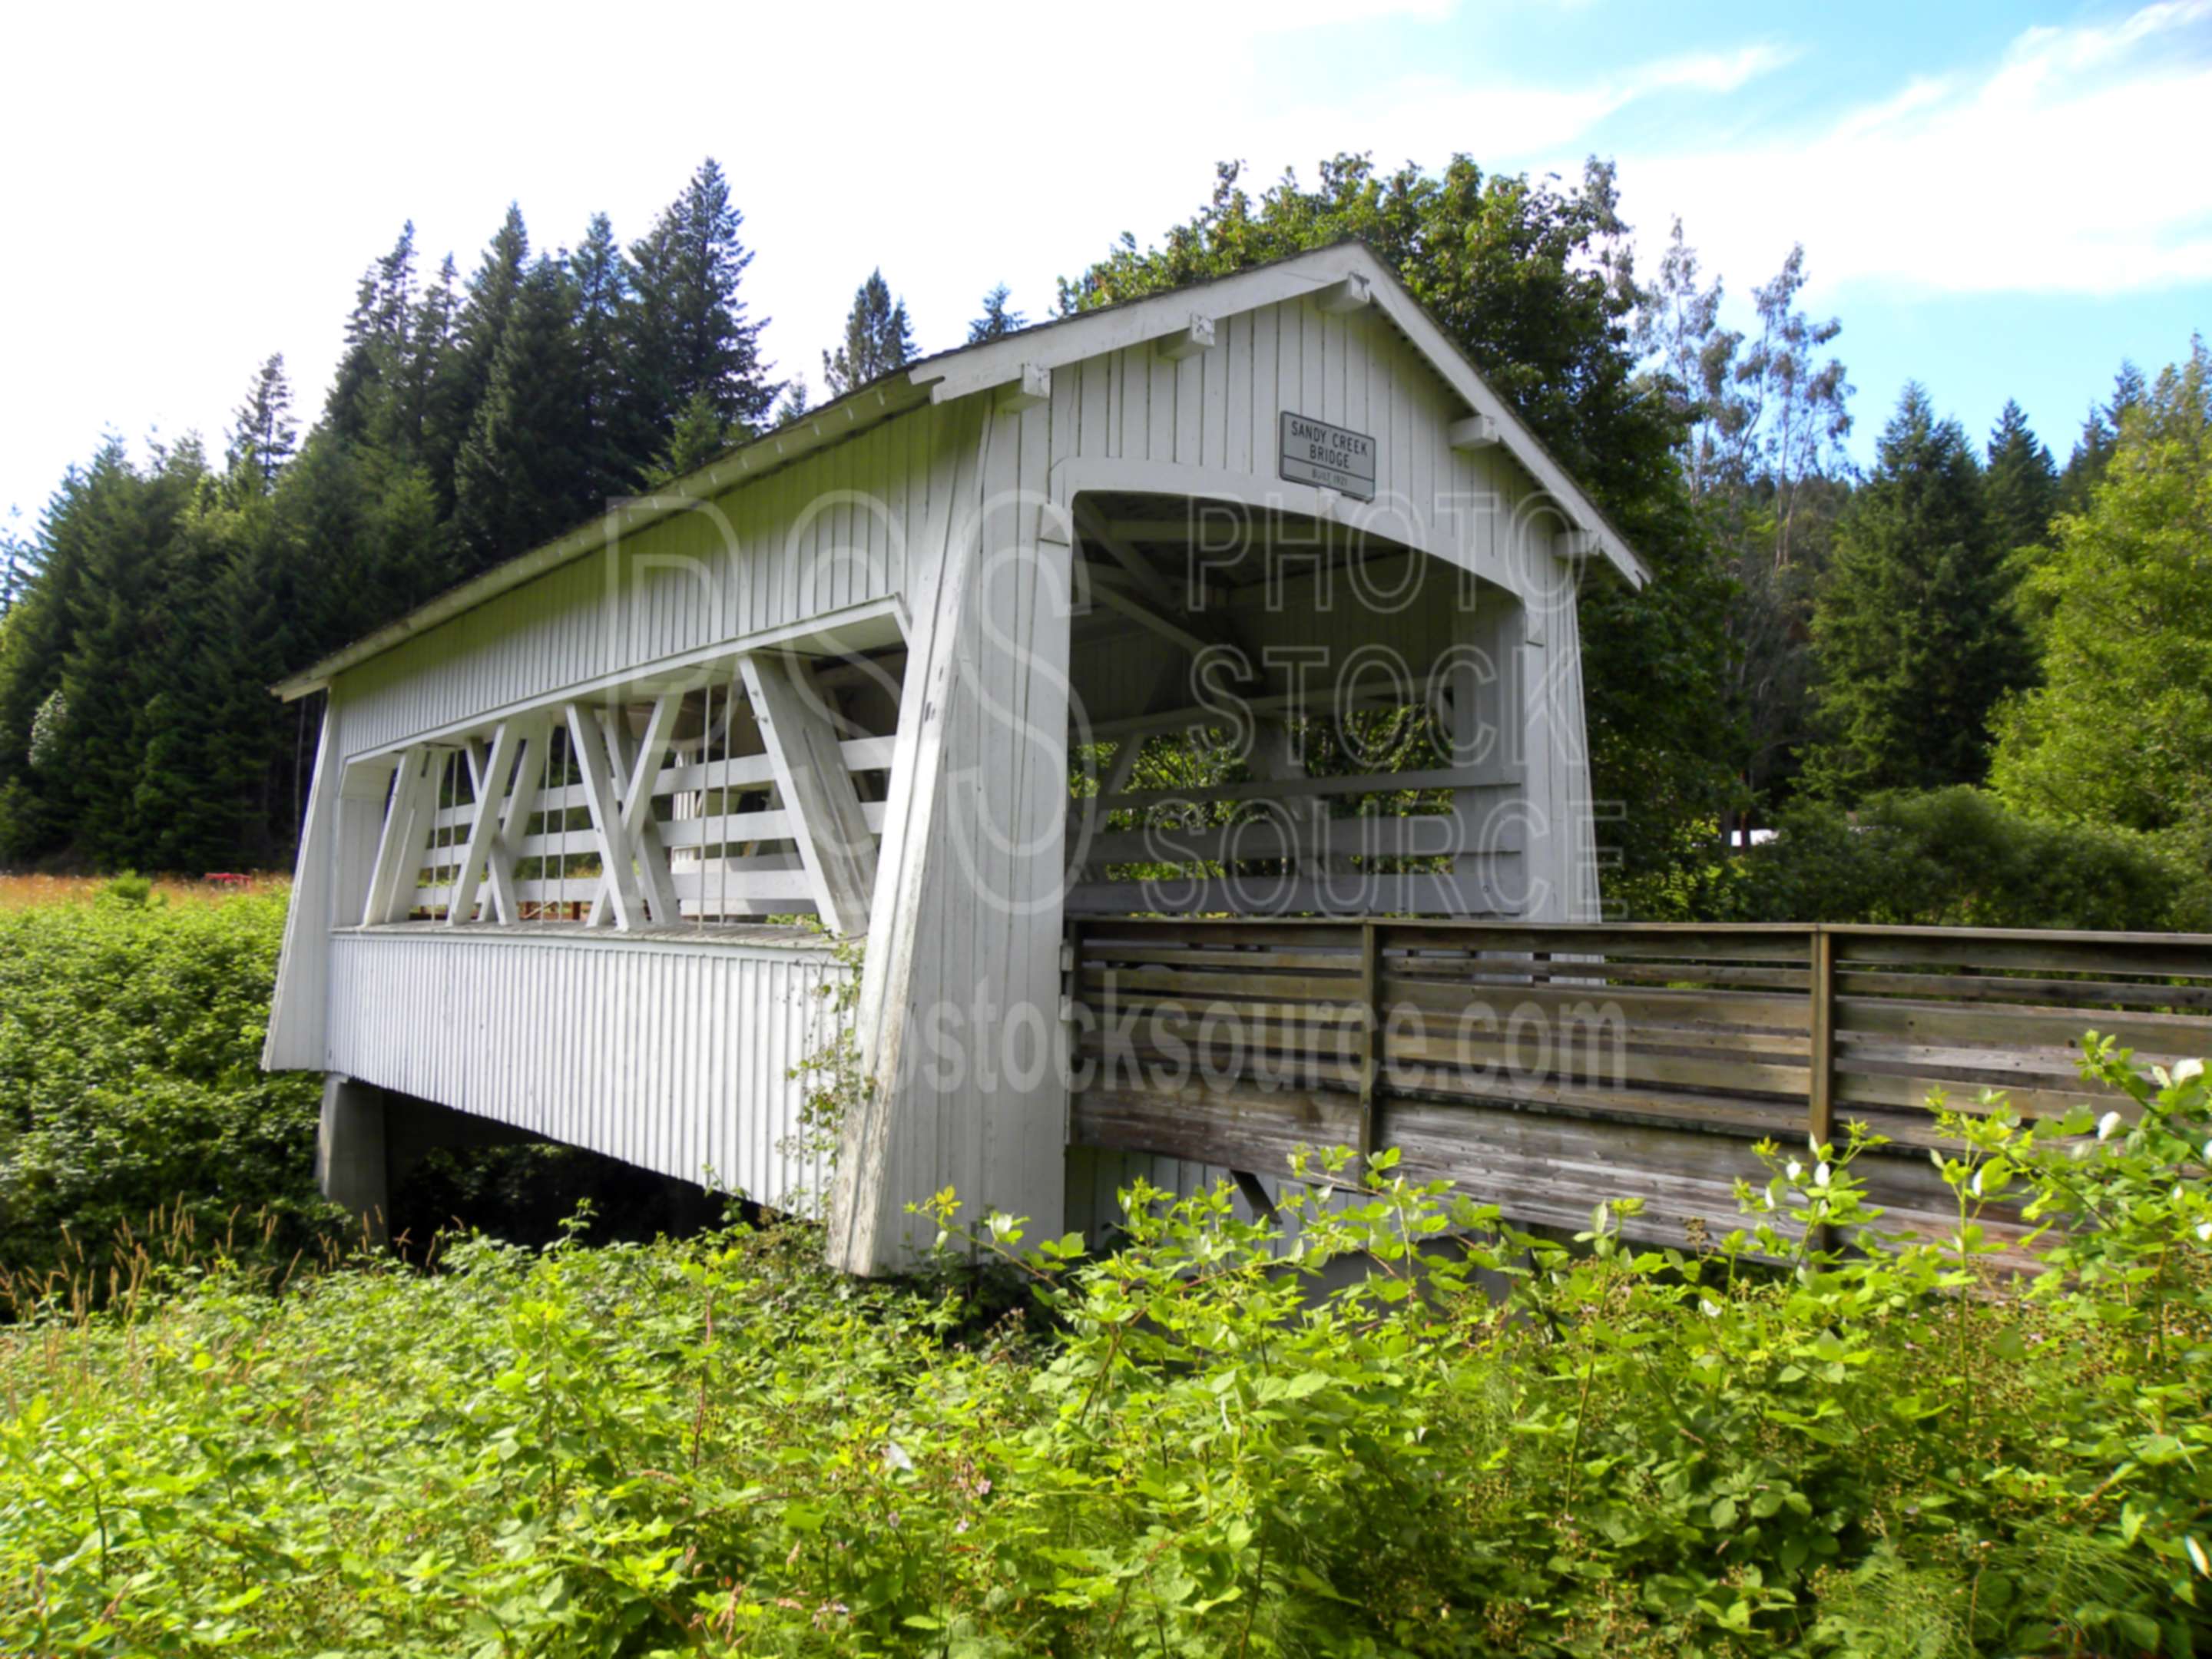 Sandy Creek Covered Bridge,bridge,bridges,covered bridge,old,historical,wooden,white